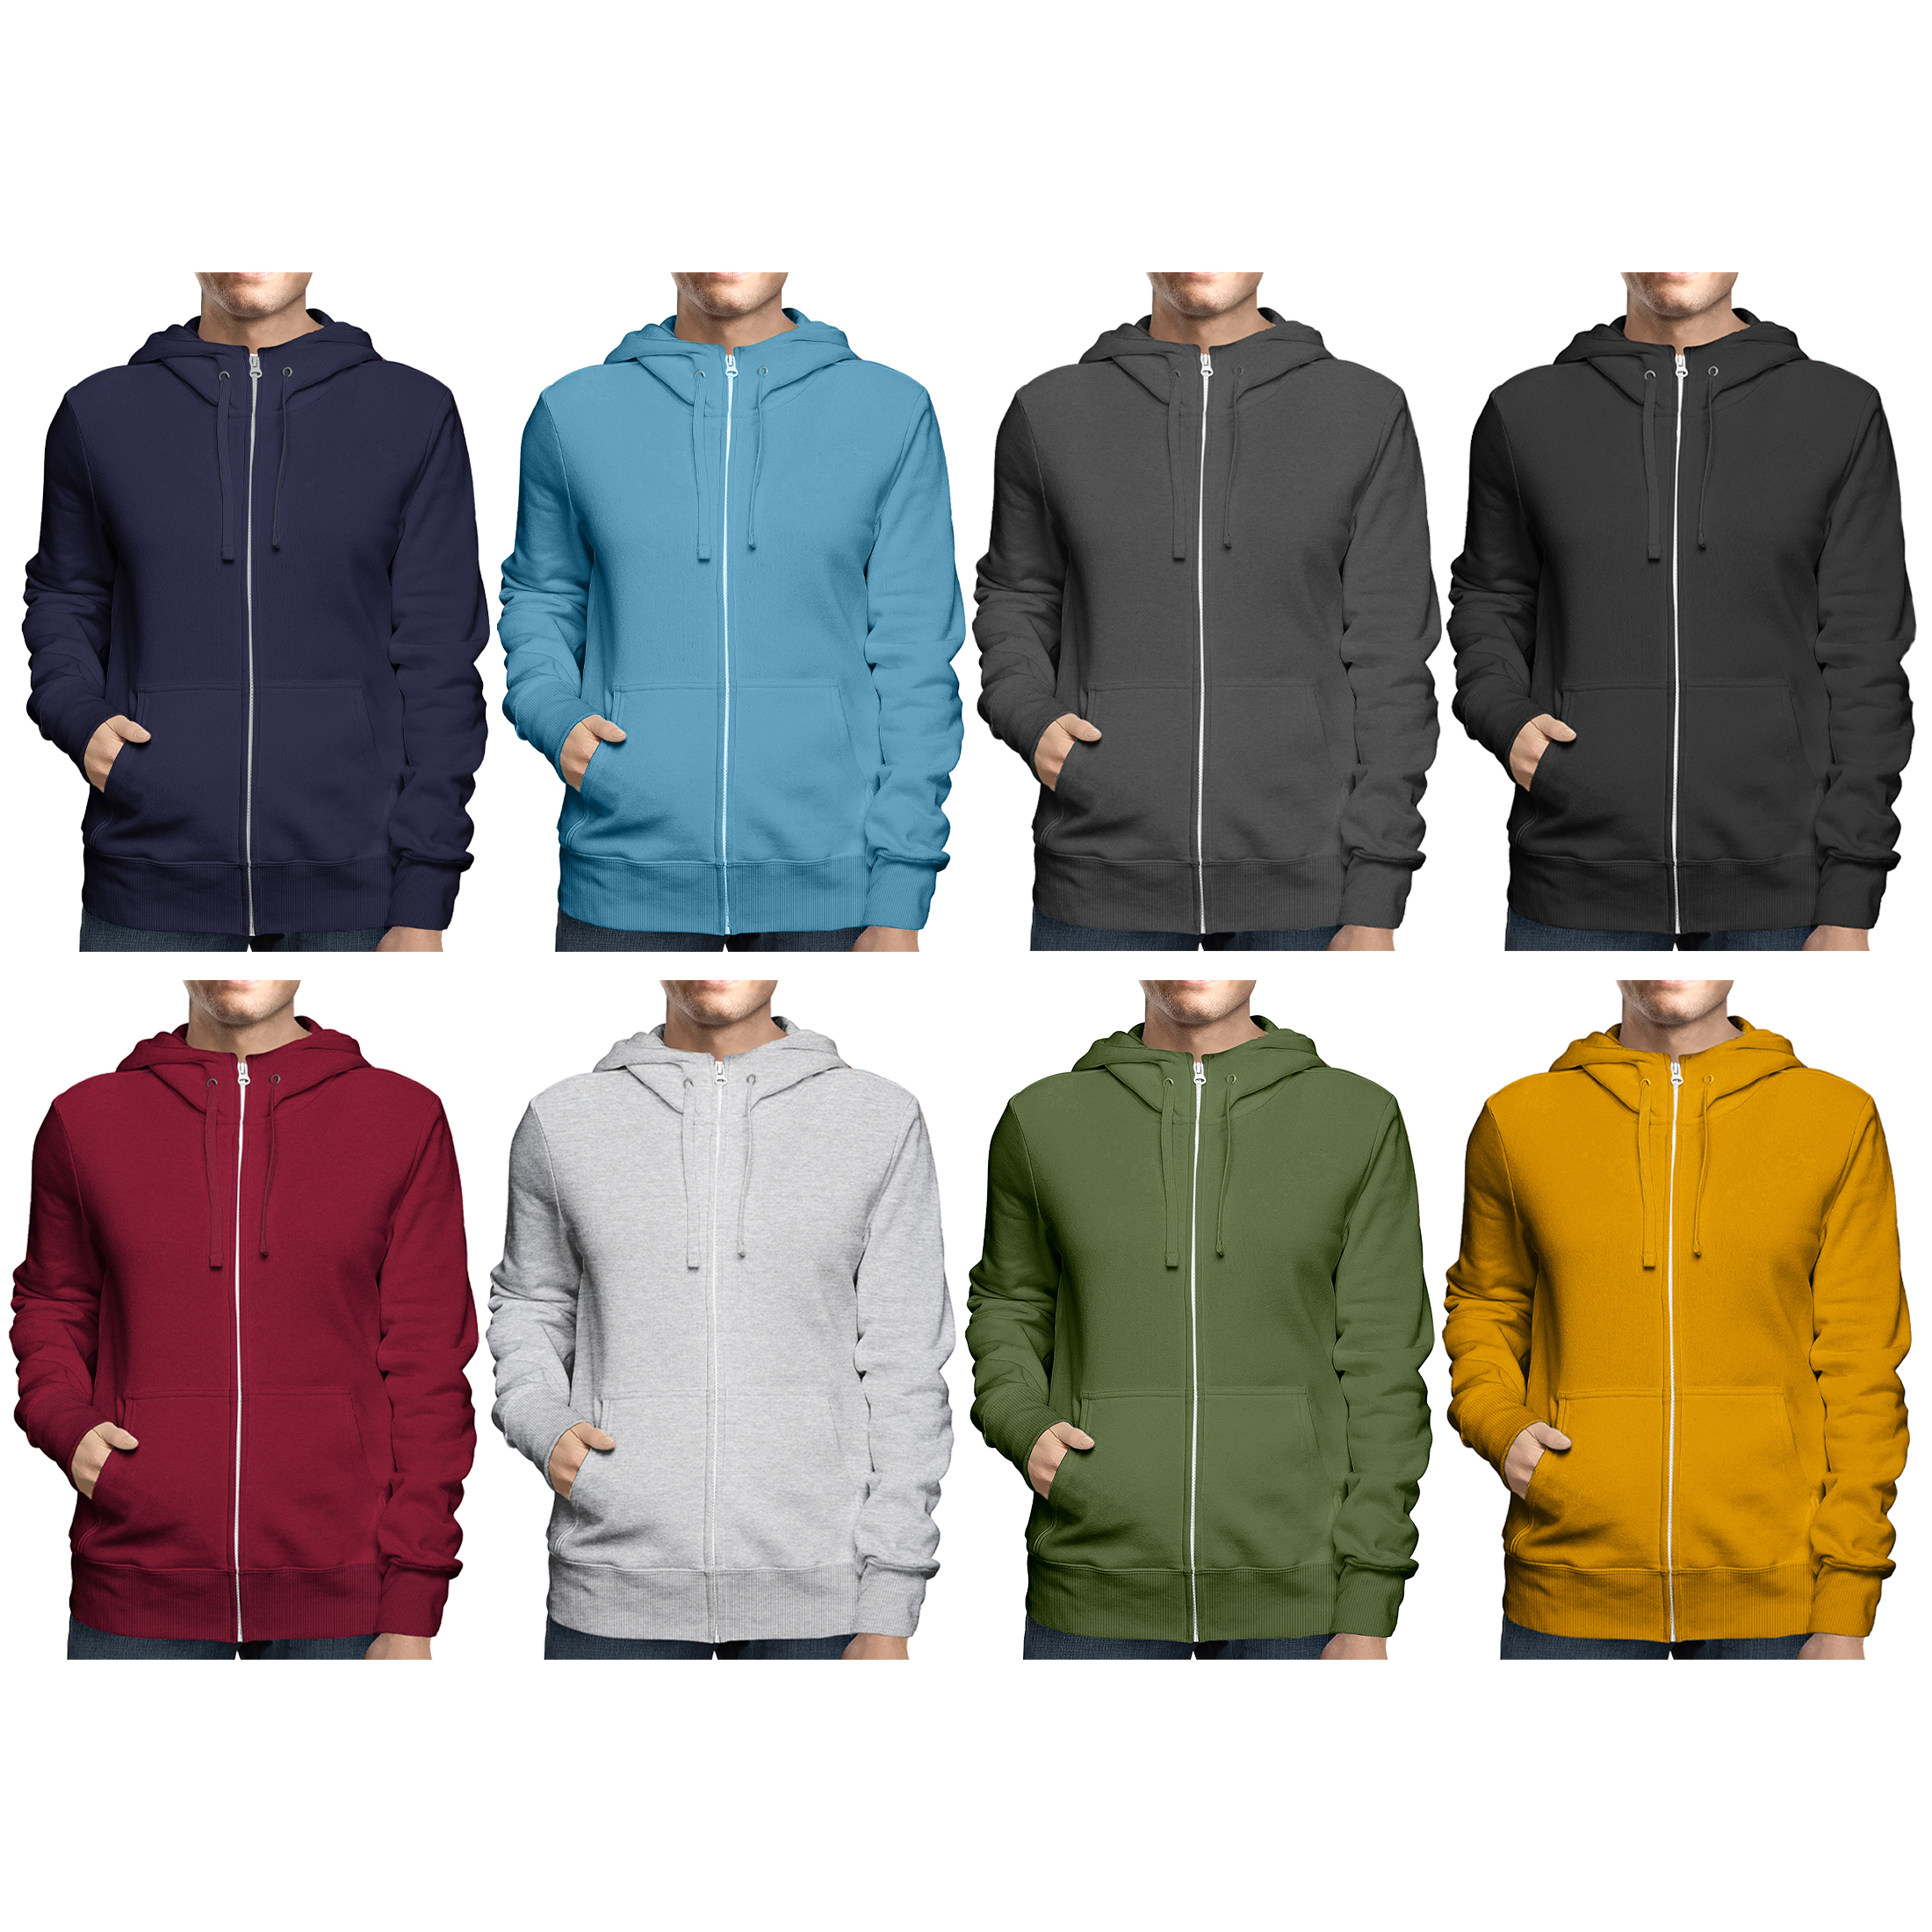 2-Pack: Men's Full Zip Up Fleece-Lined Hoodie Sweatshirt (Big & Tall Size Available) - Black & Burgundy, 4x-large